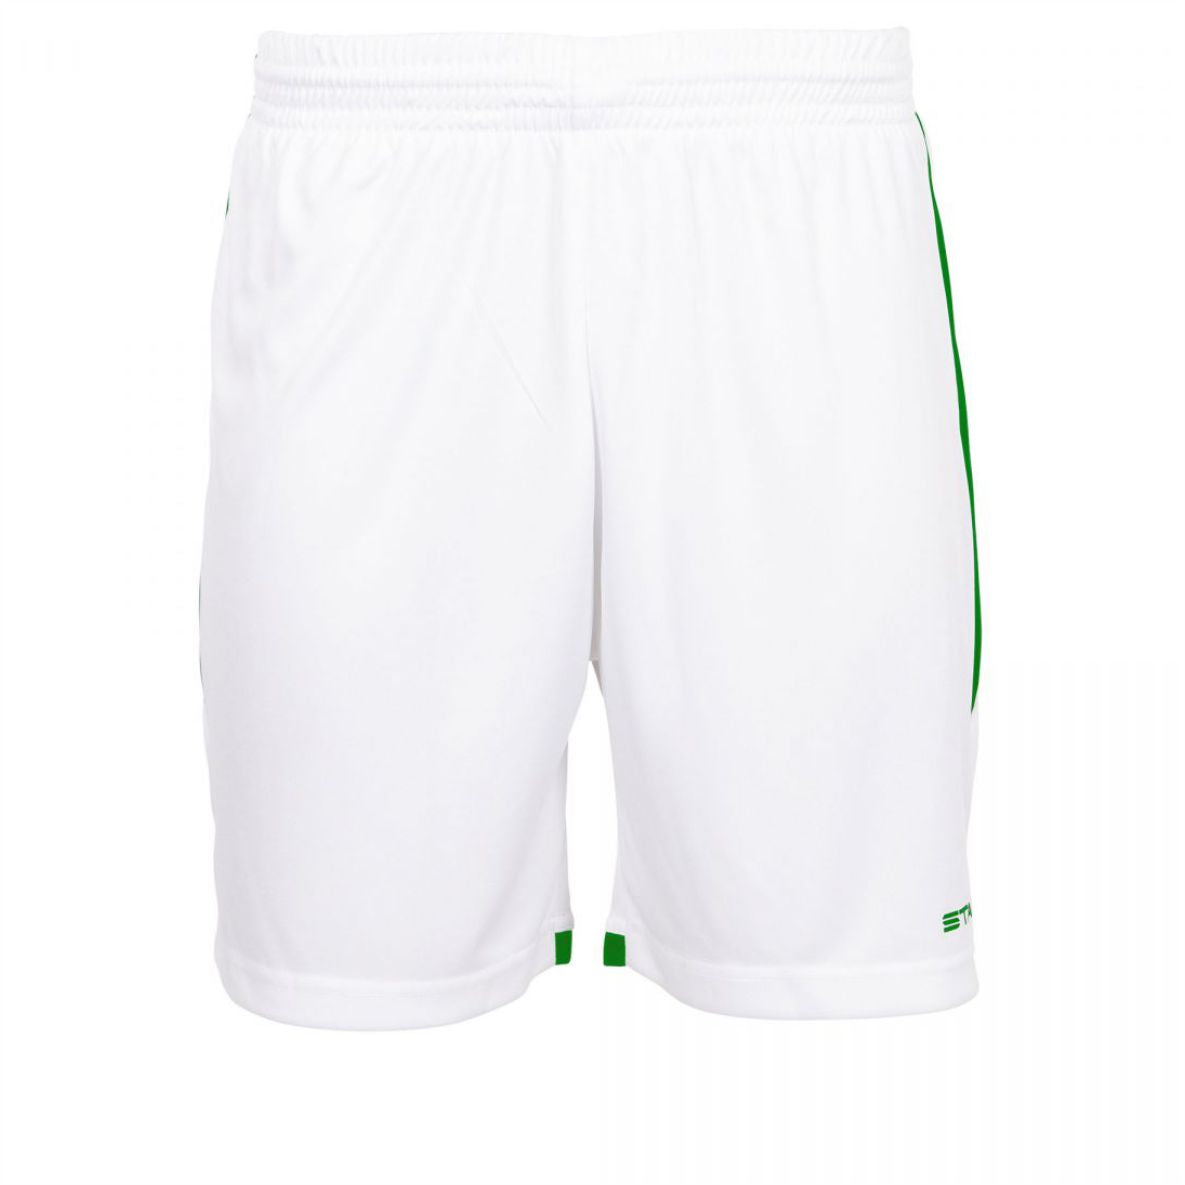 Stanno - Focus Shorts - White & Green